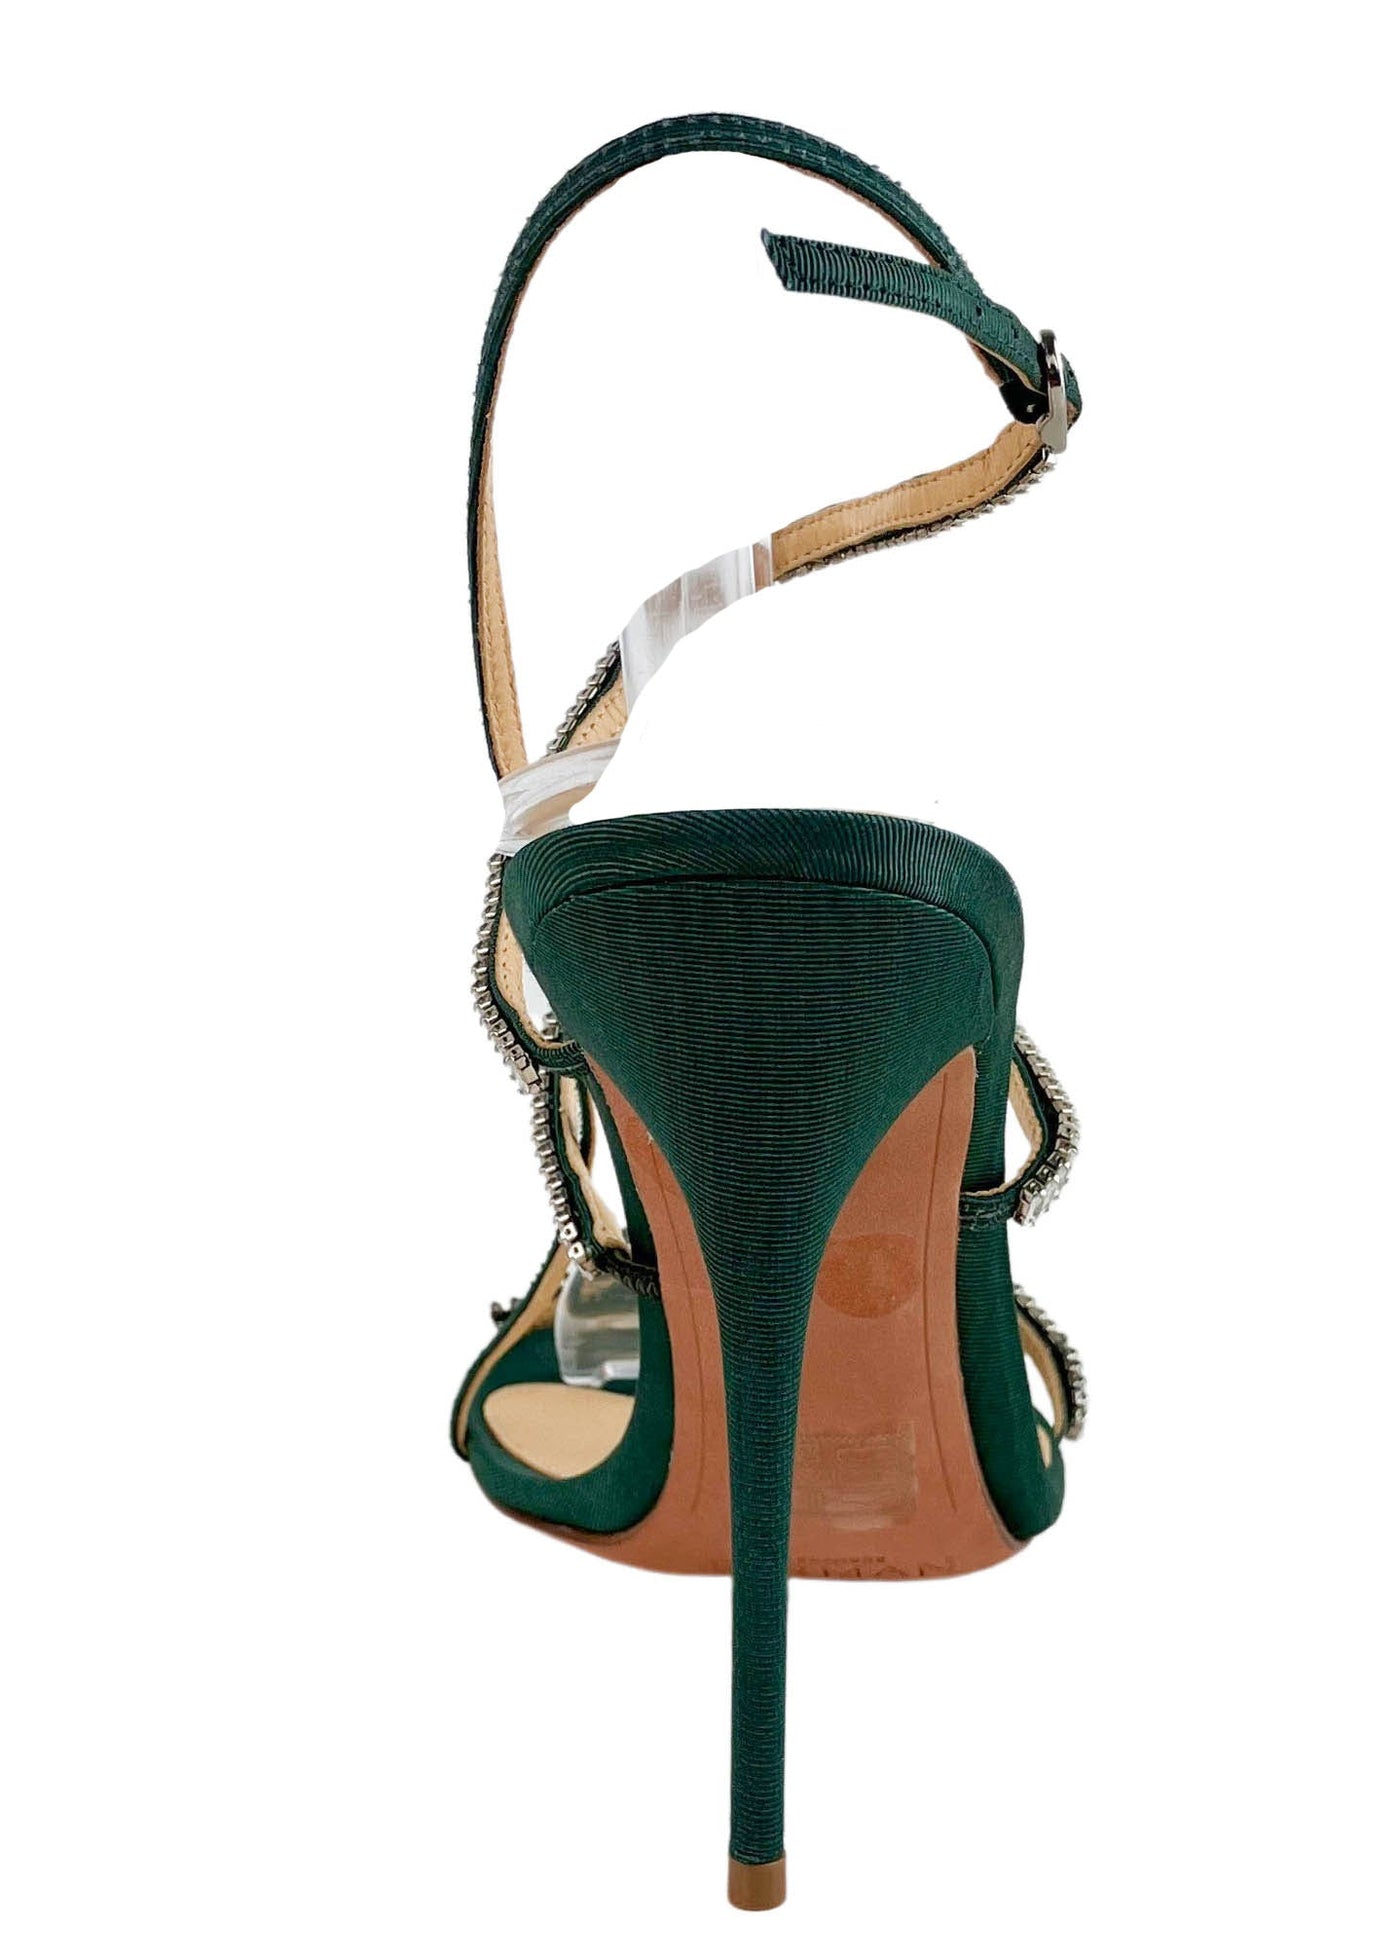 Alexandre Birman Sally Grosgrain Sandals in Emerald - Discounts on Alexandre Birman at UAL